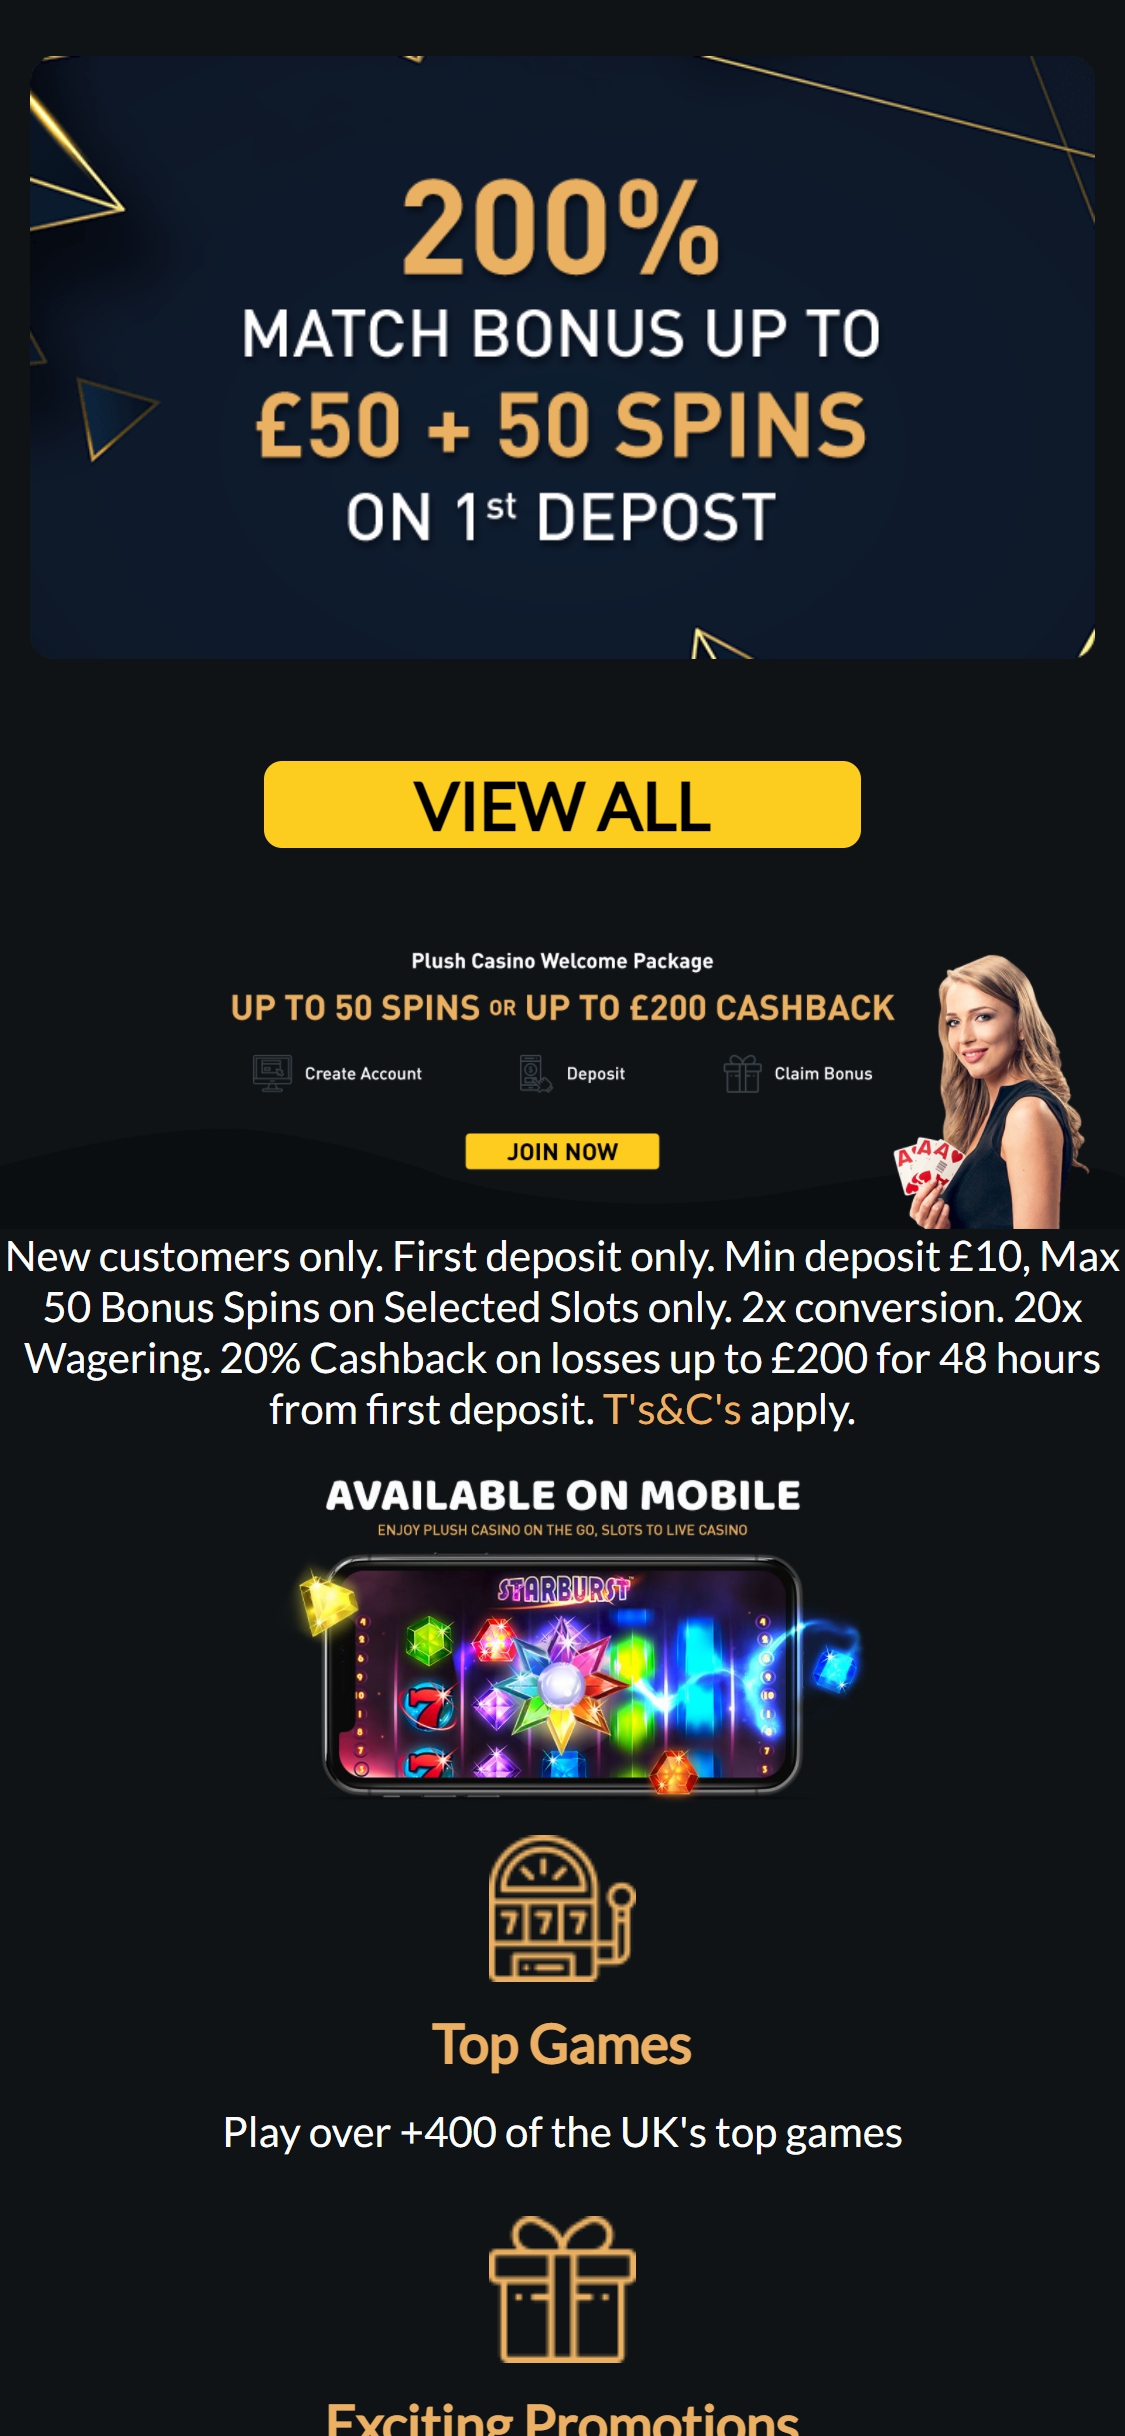 Plush Casino Mobile No Deposit Bonus Review